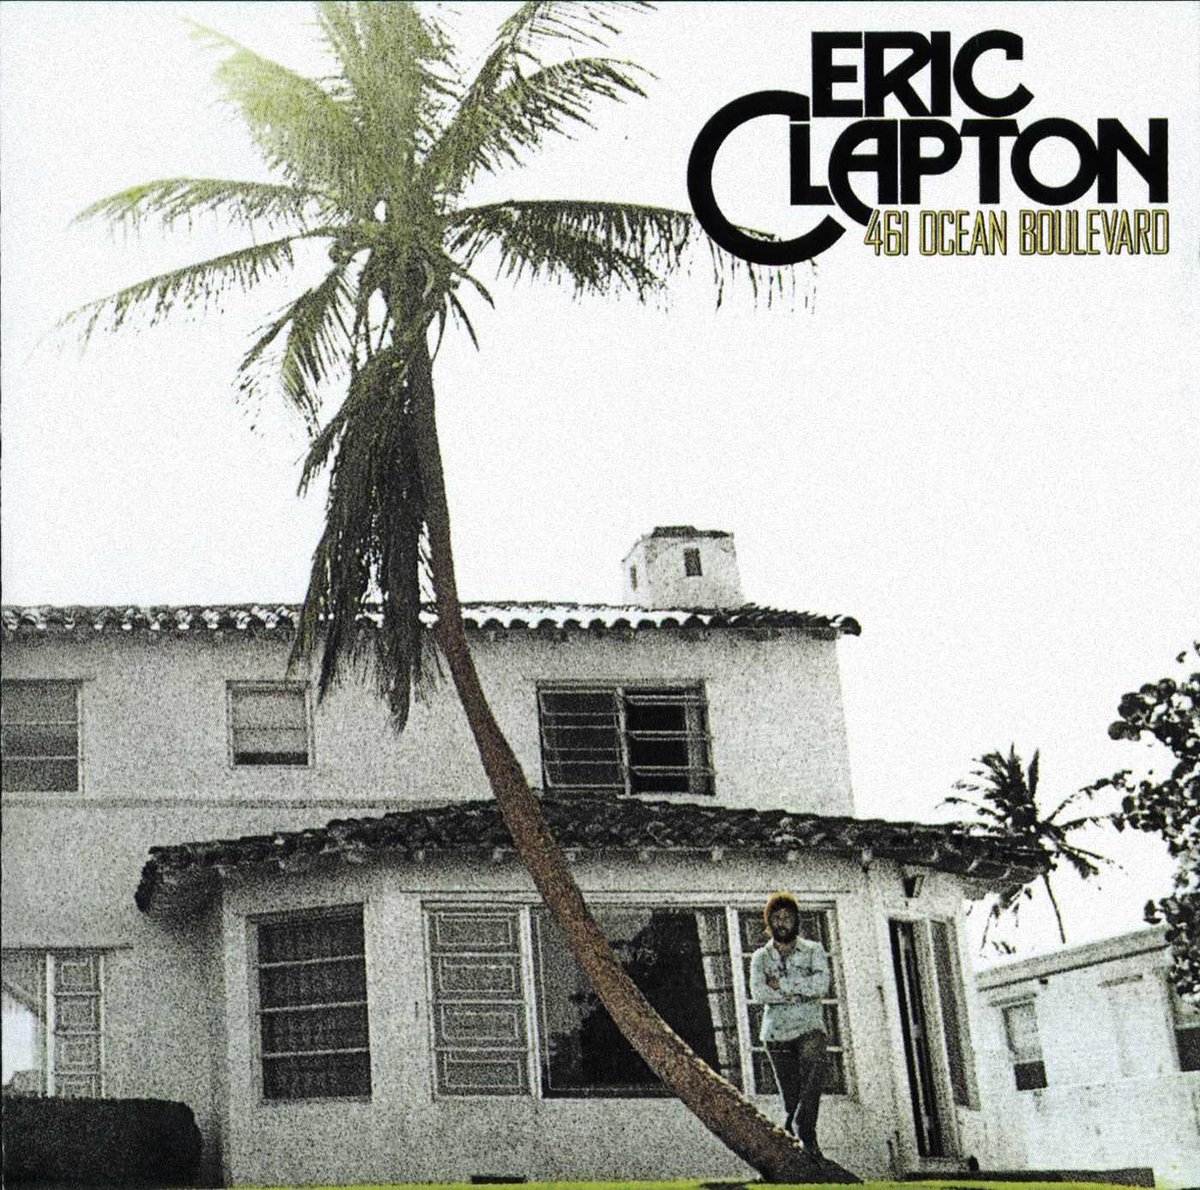 #albumsyoumusthear Eric Clapton - 461 Ocean Boulevard - 1974